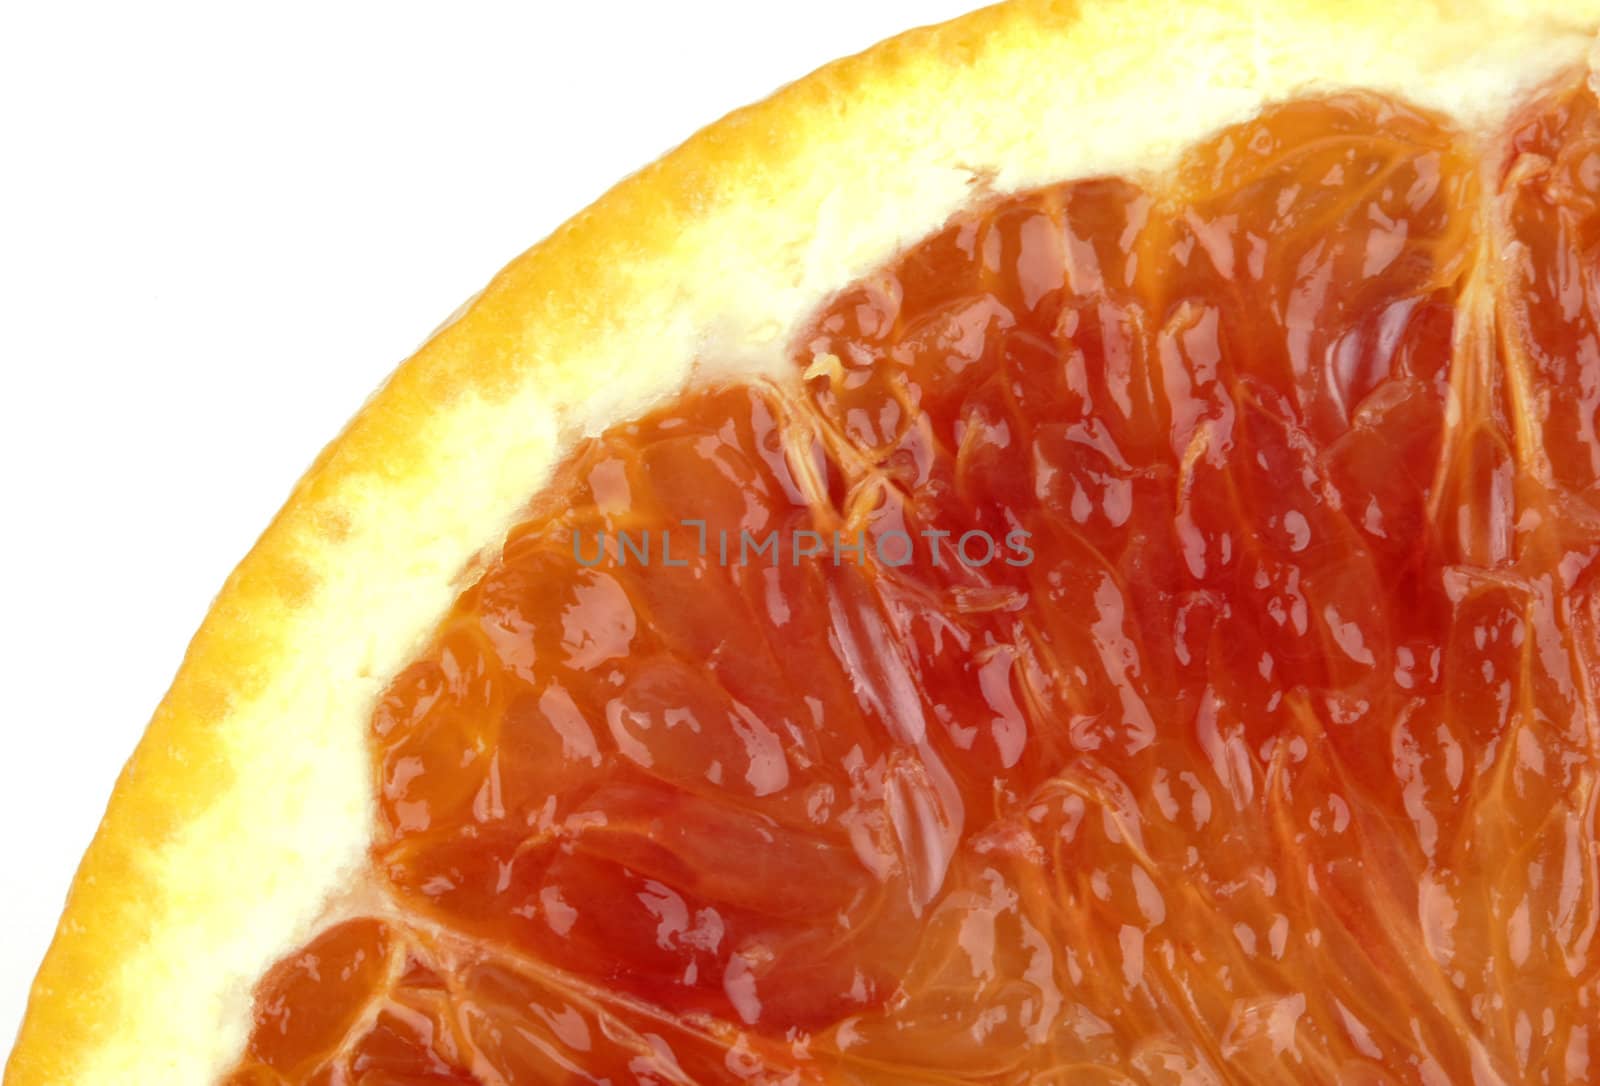 slice of blood orange